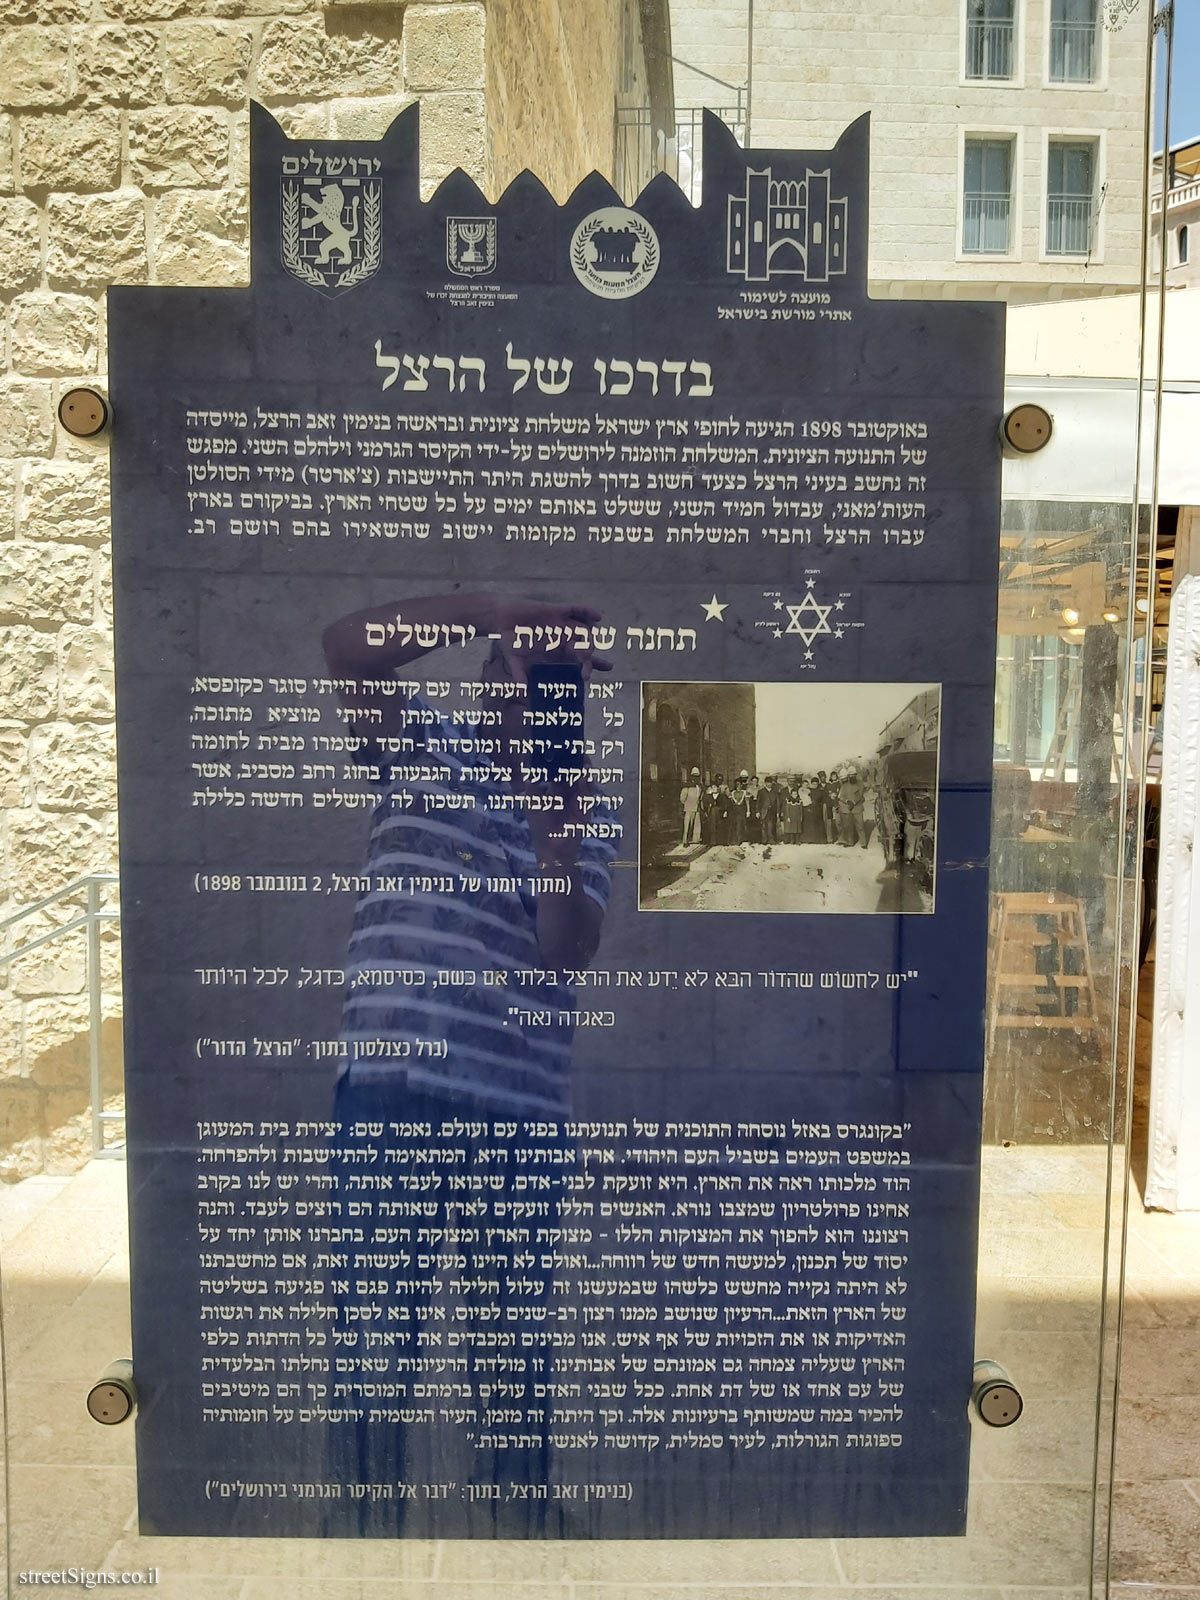 Jerusalem - Heritage Sites in Israel - In Herzl’s Way - 7th Station